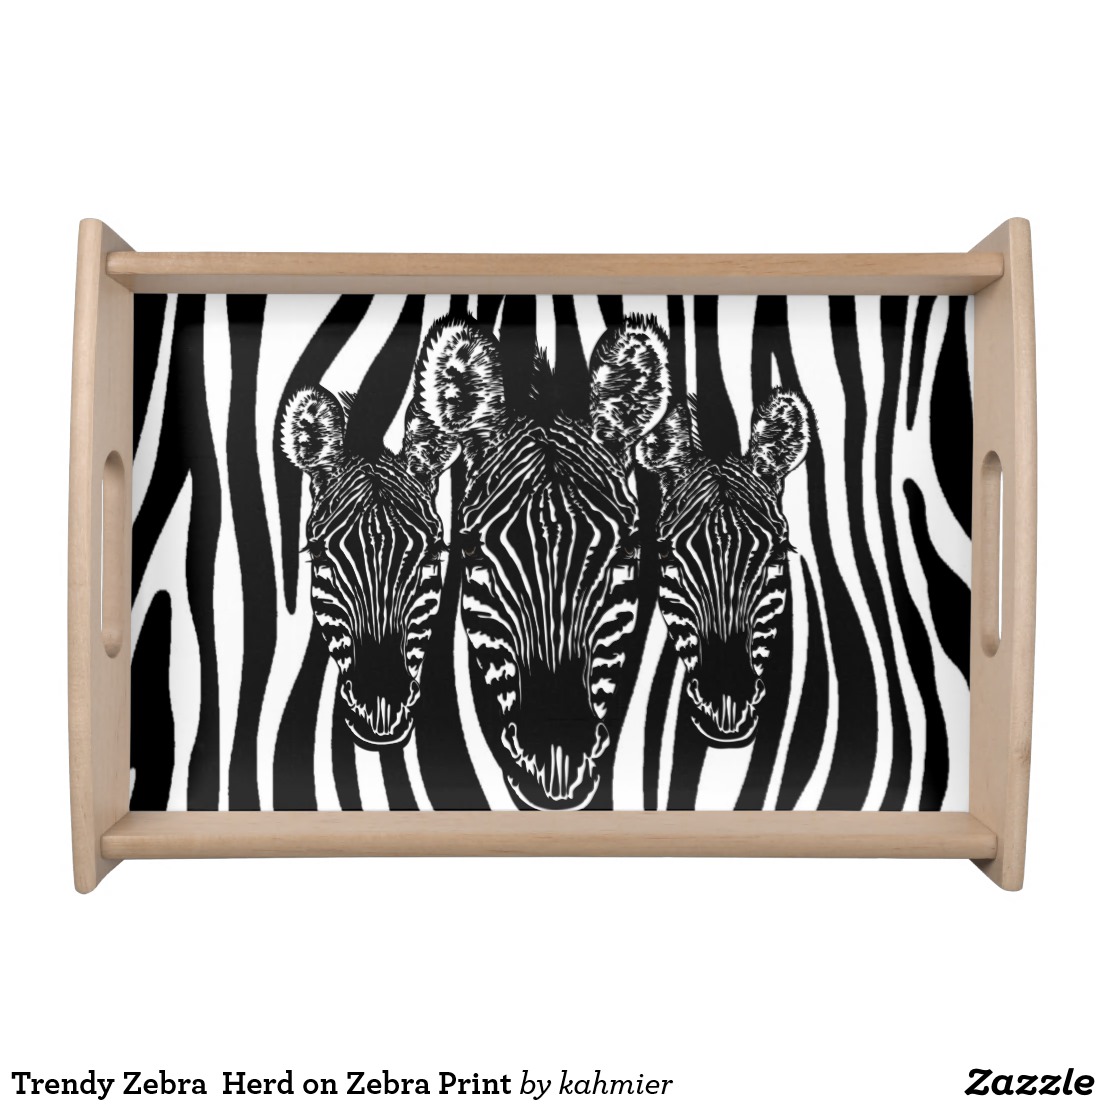 Trendy Zebra Herd on Zebra Print Serving Tray